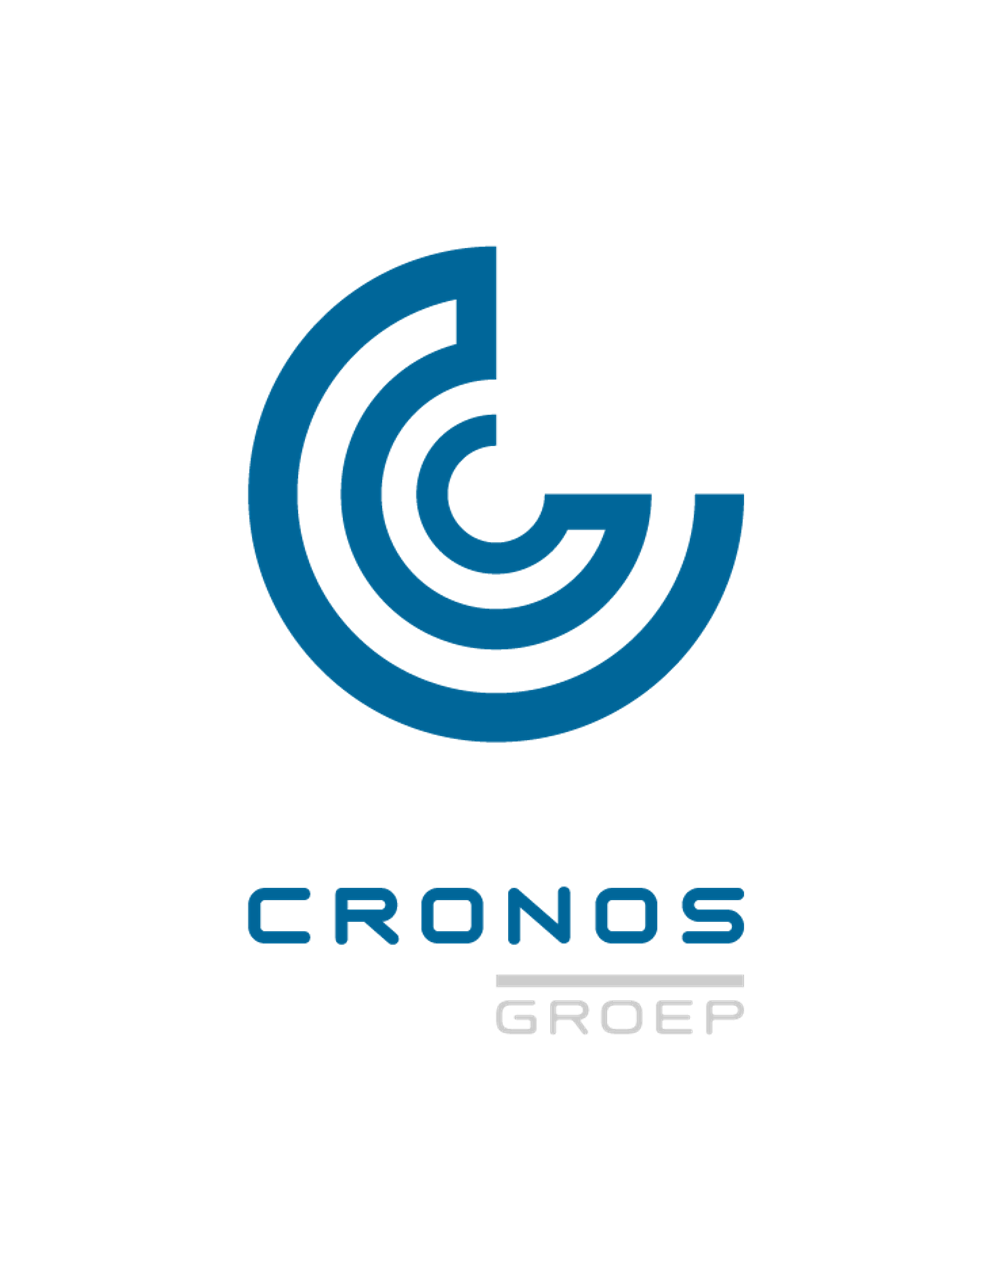 E-16_CRONOS-GROEP_BLUE-GREY-POS_W.png